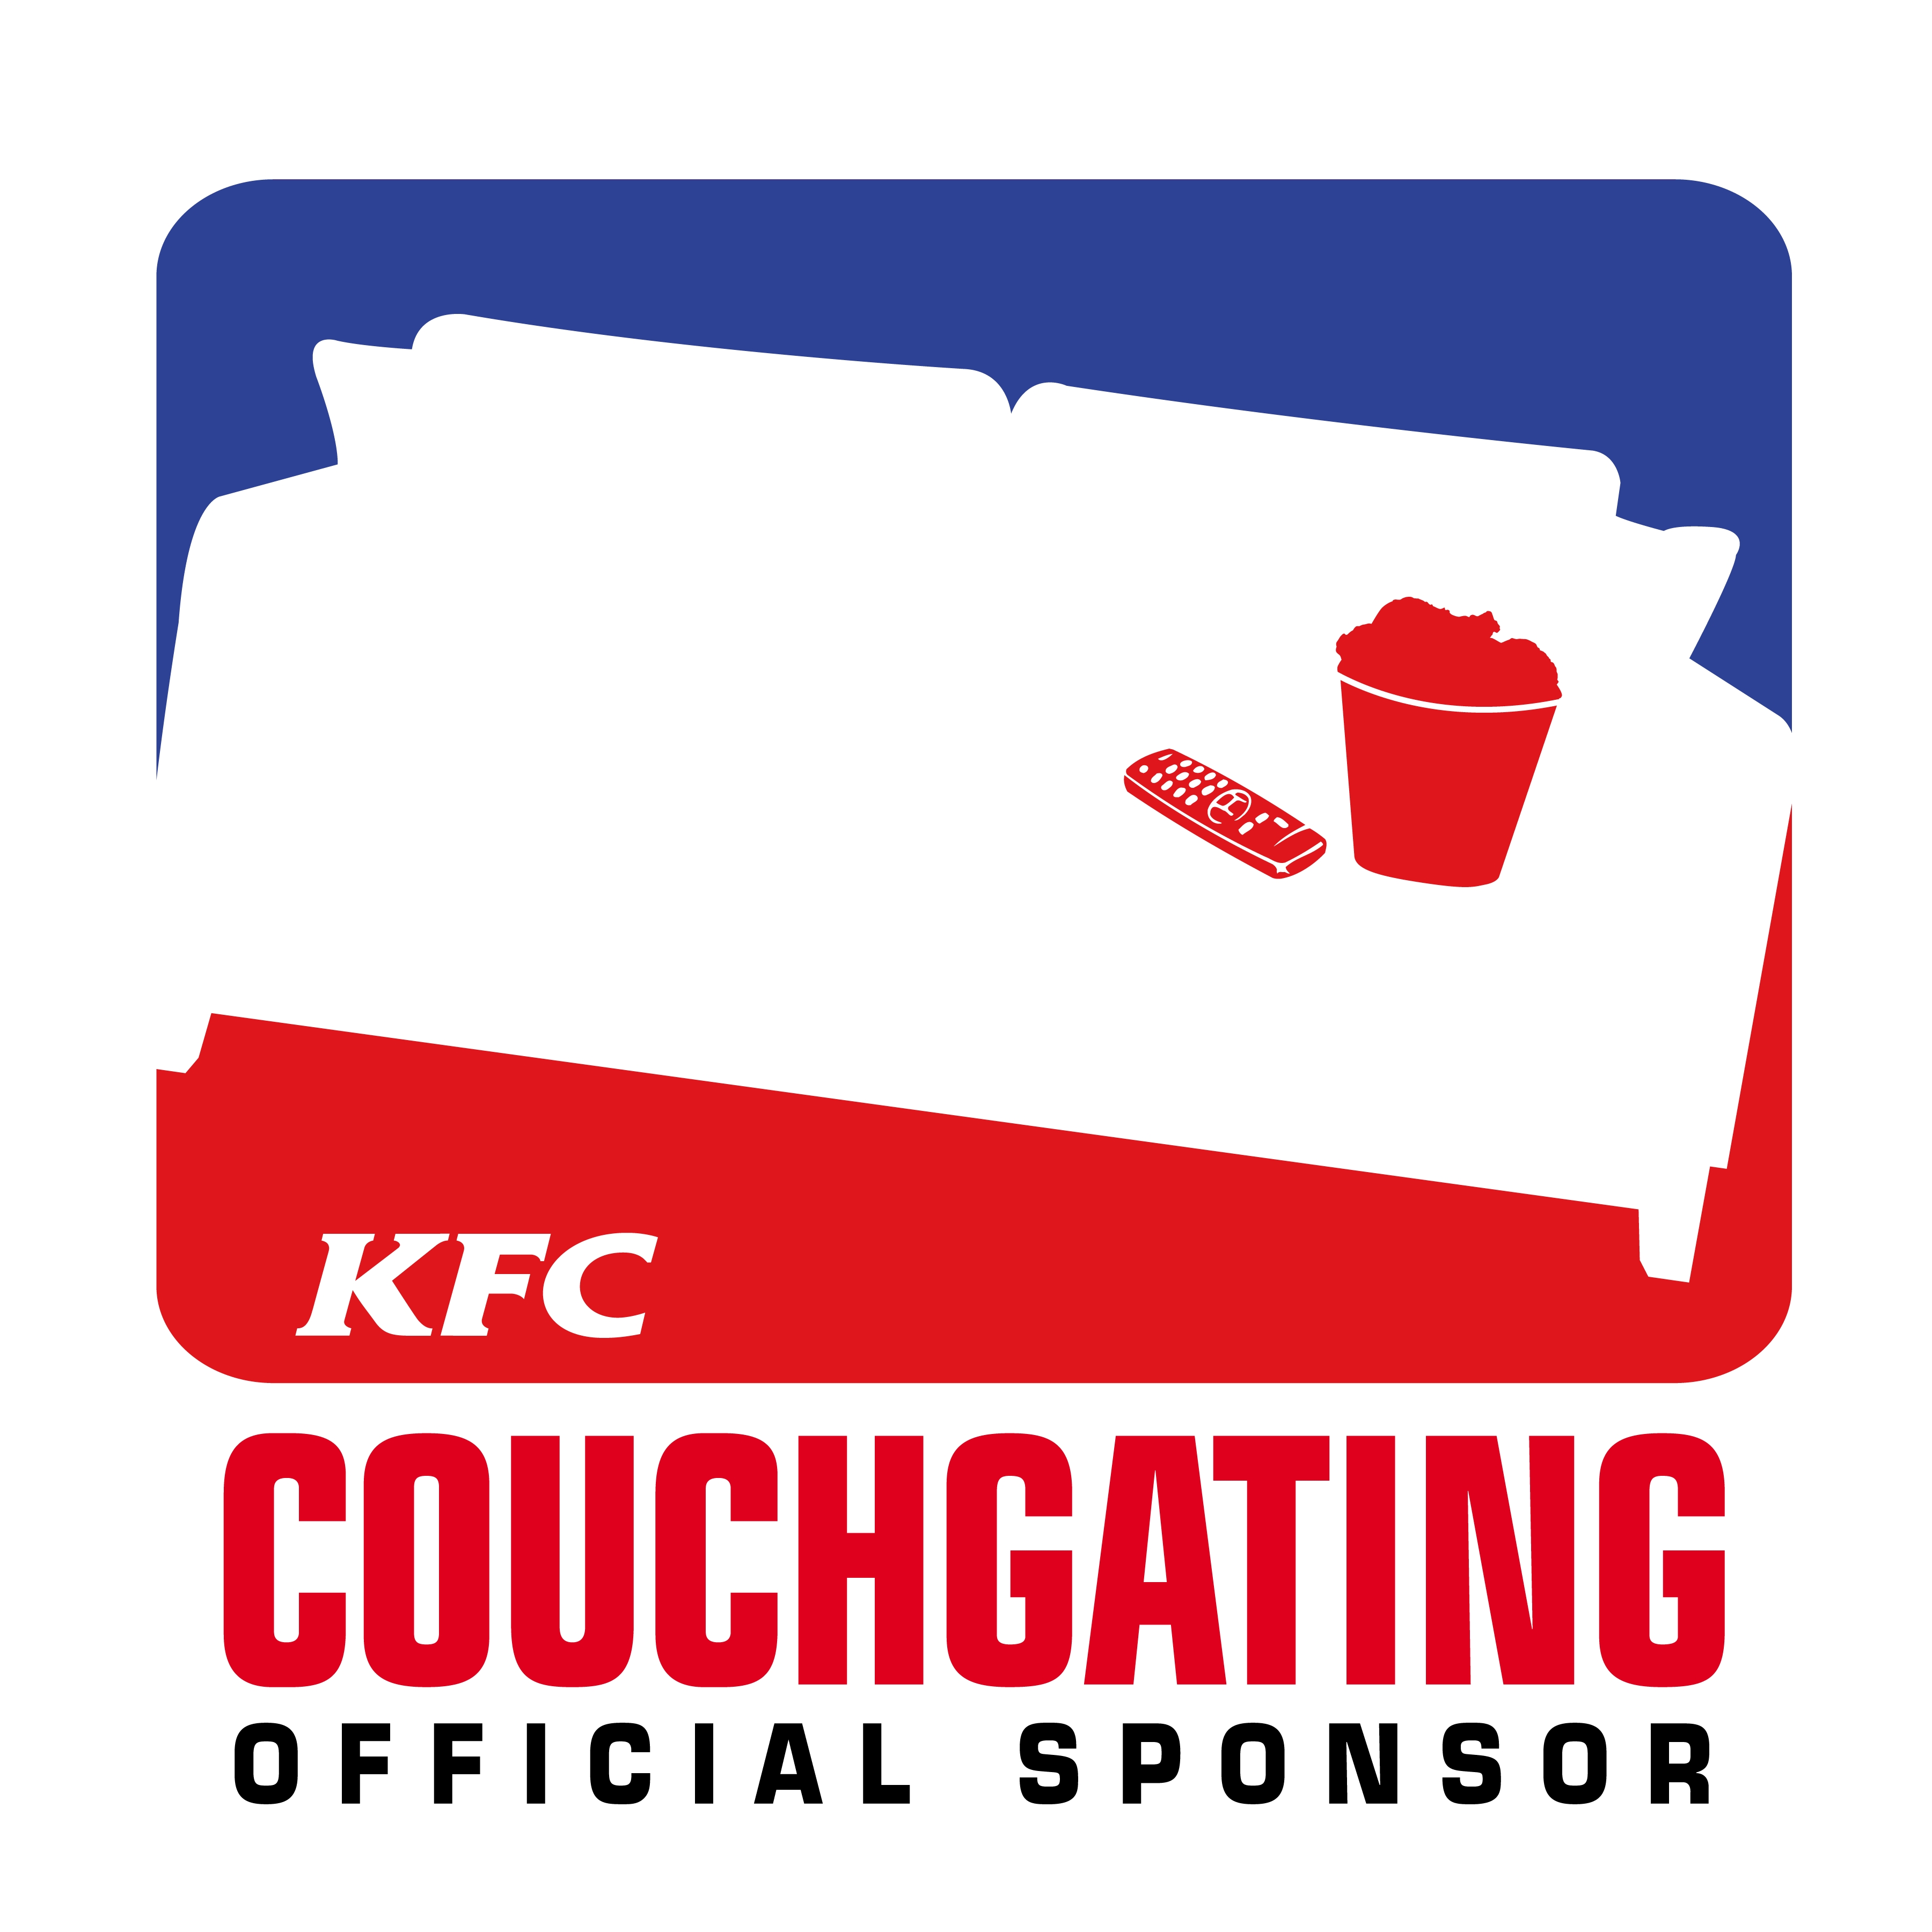 couchgating KFC logo